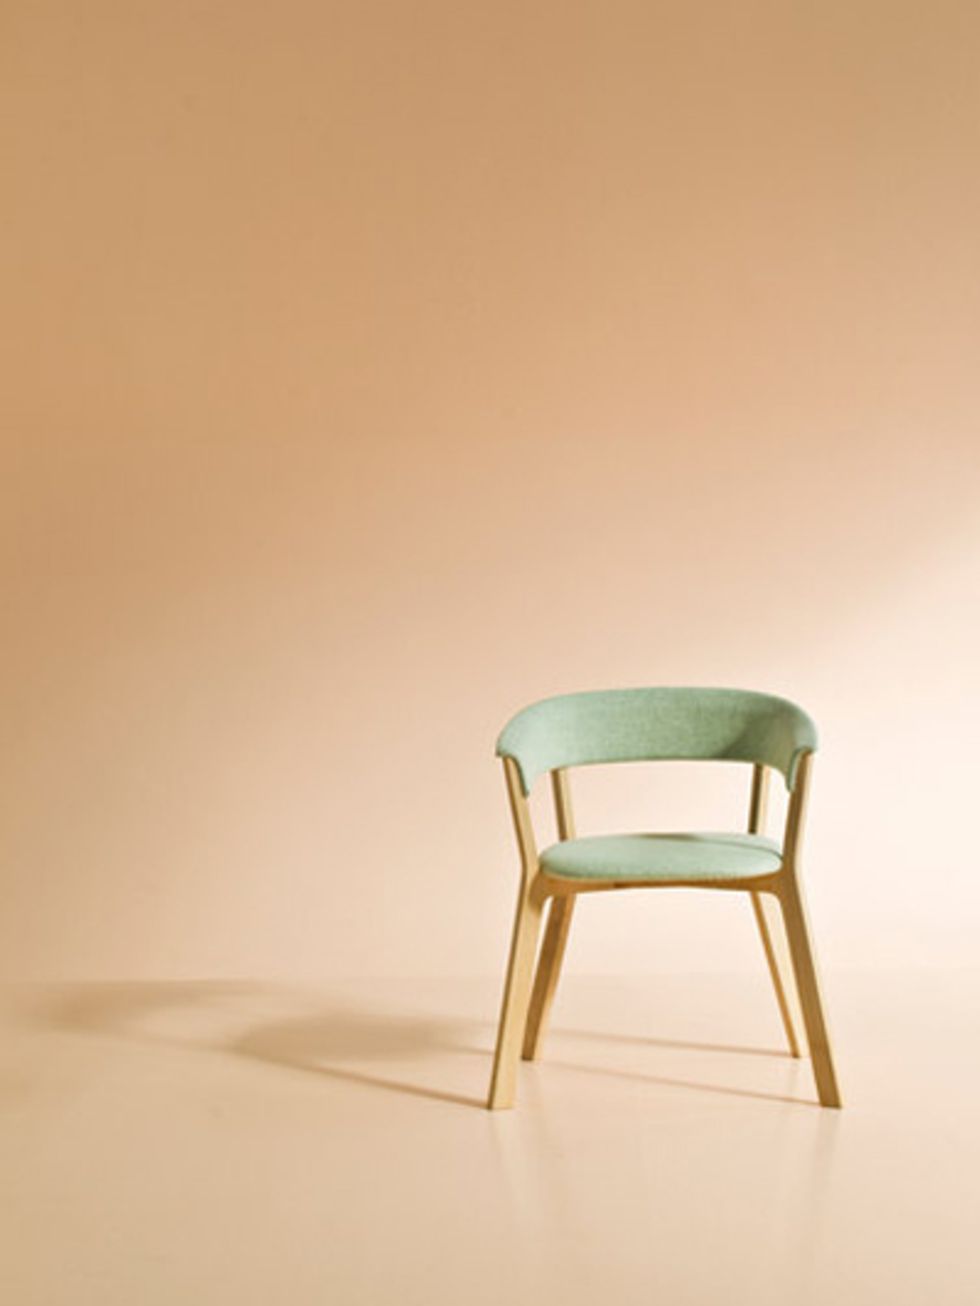 Wood, Chair, Furniture, Tan, Hardwood, Still life photography, Plywood, 